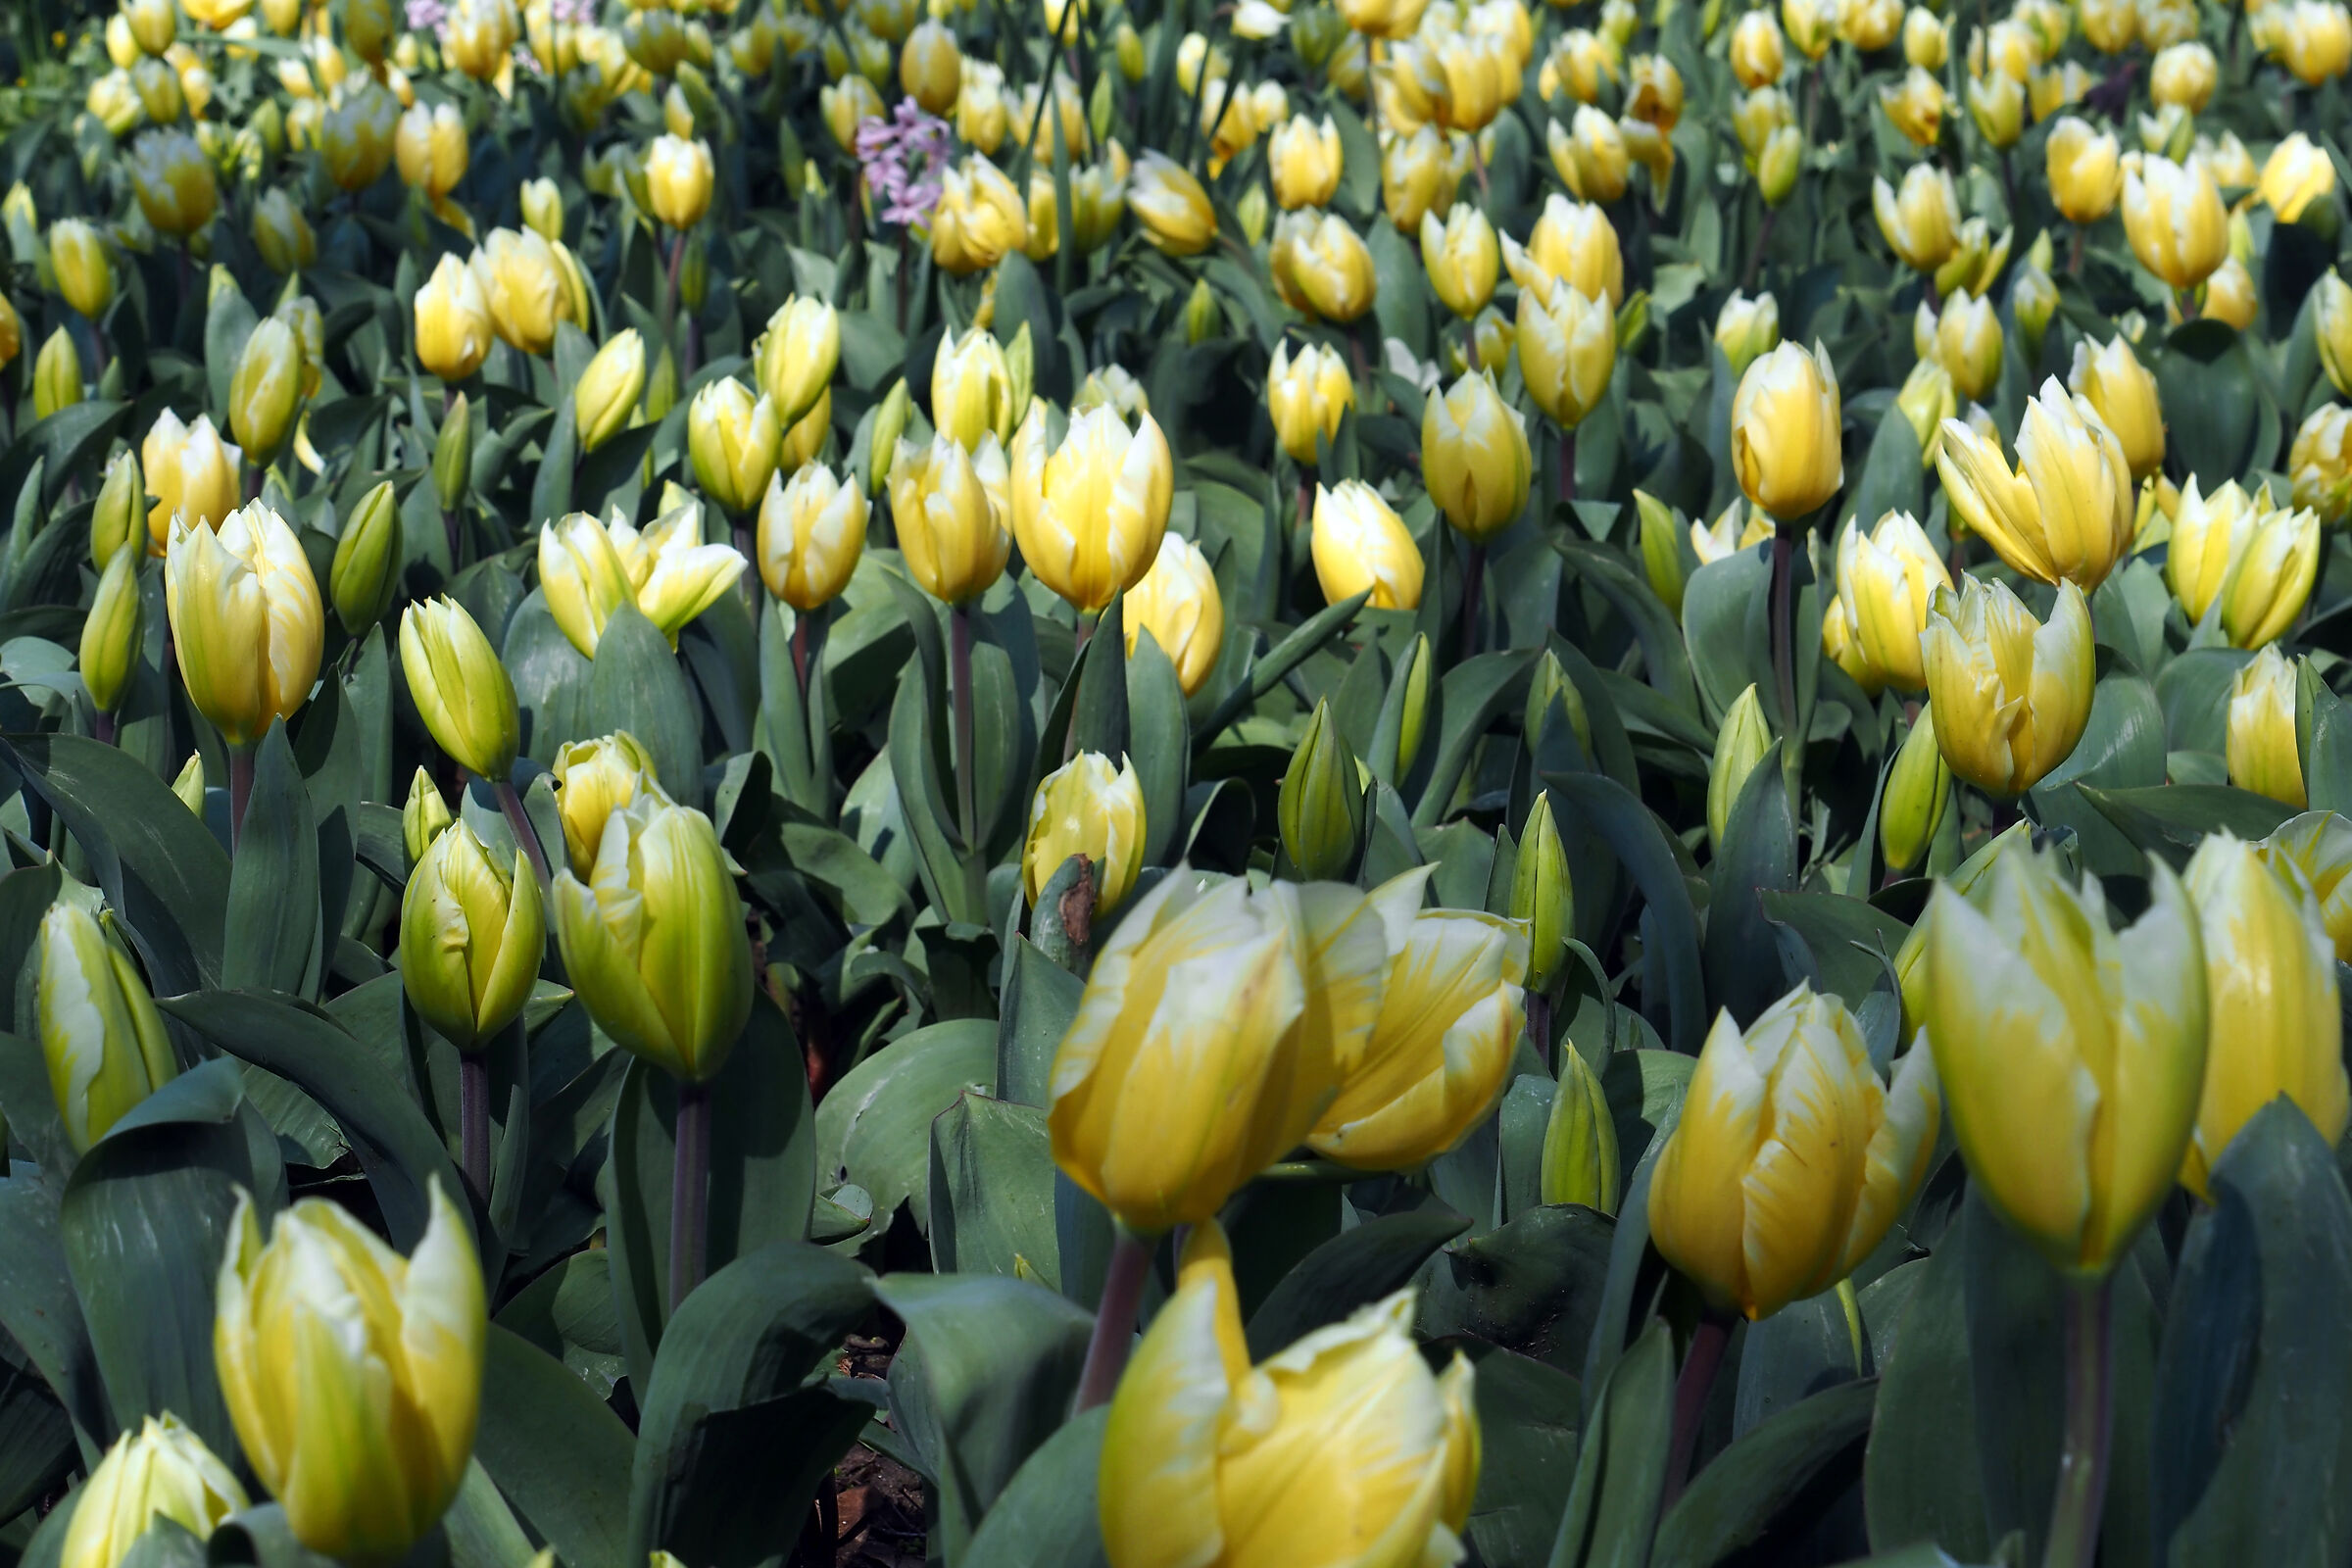 The tulips of Pralormo...